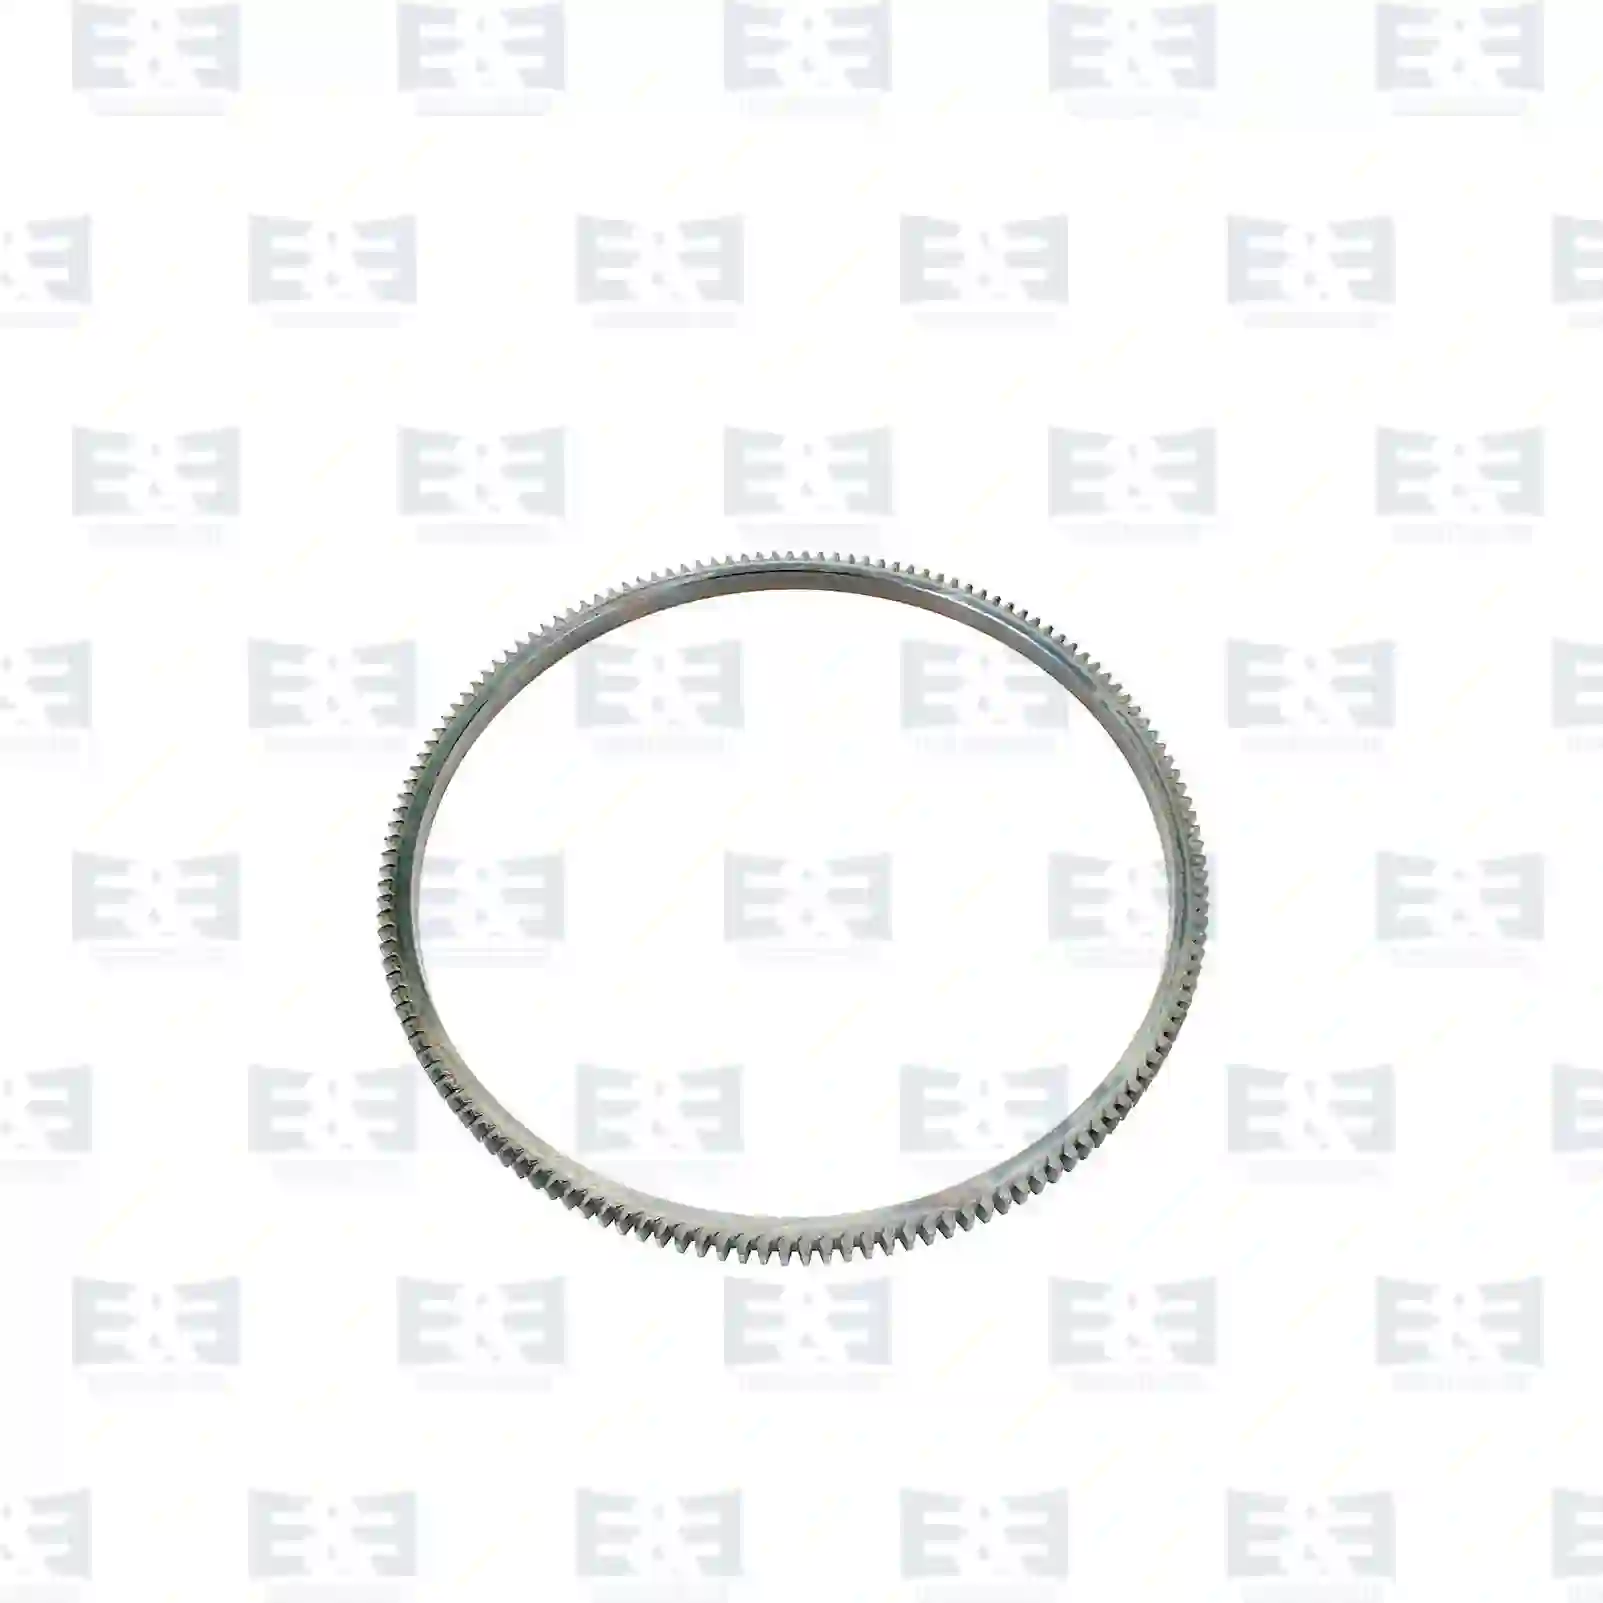  Ring gear || E&E Truck Spare Parts | Truck Spare Parts, Auotomotive Spare Parts